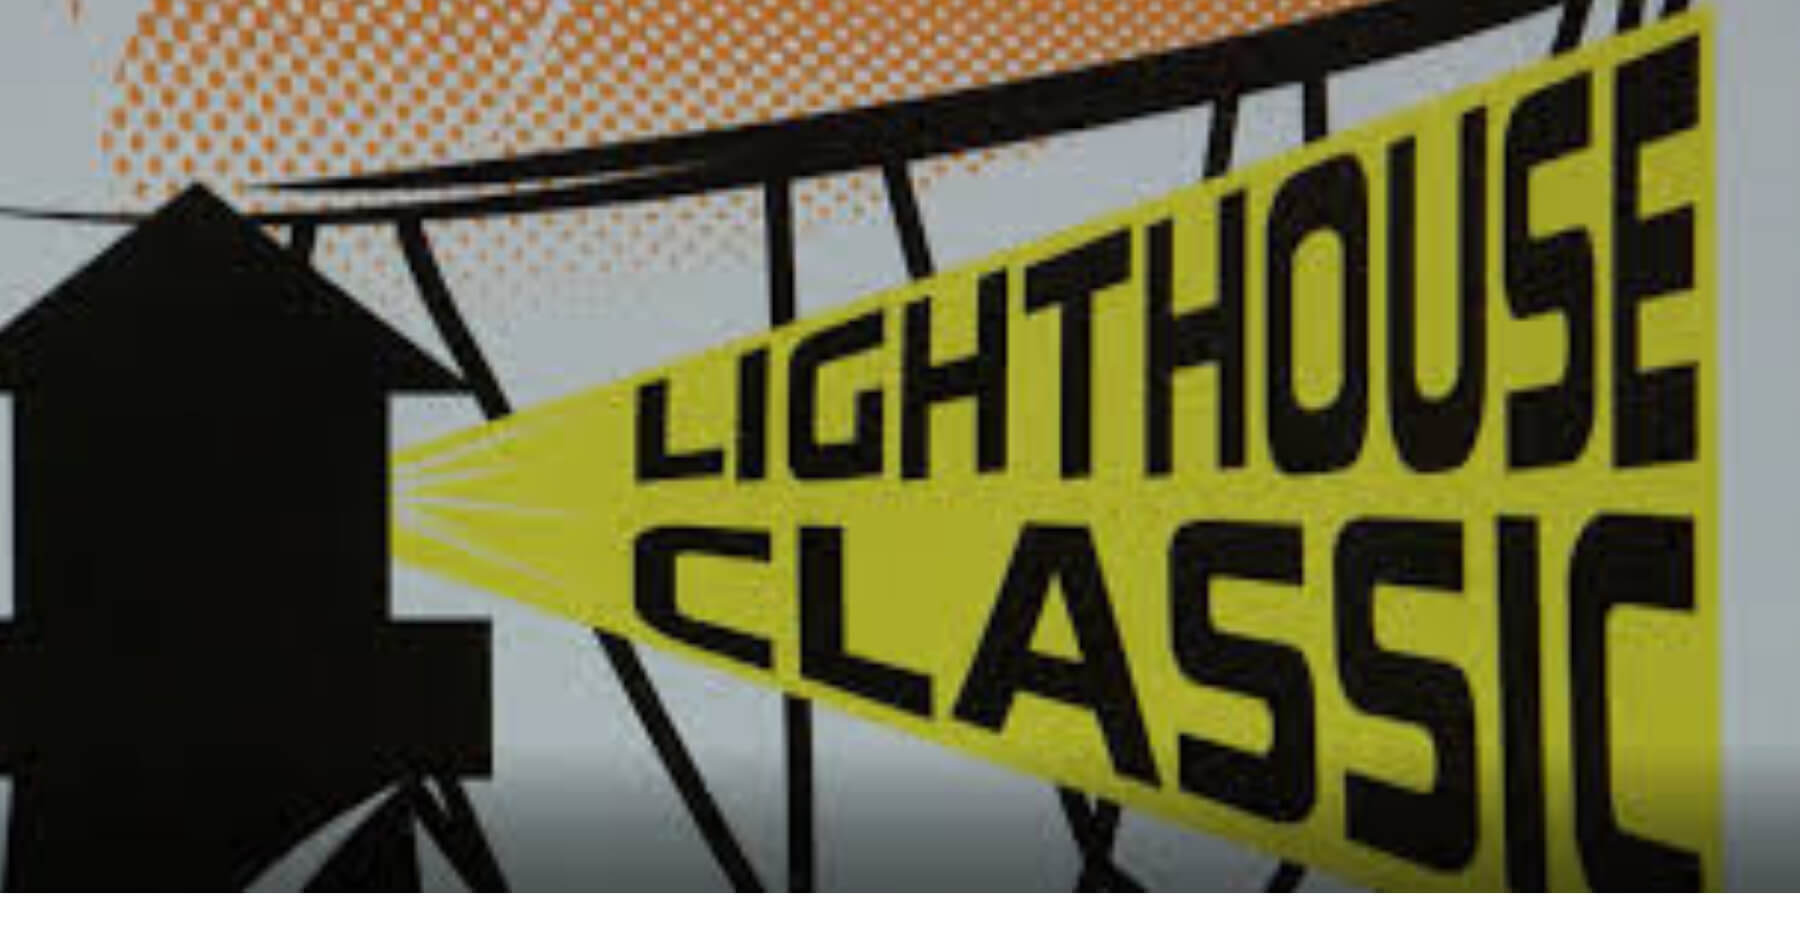 Lighhouse Classic basketball tournament cancelled